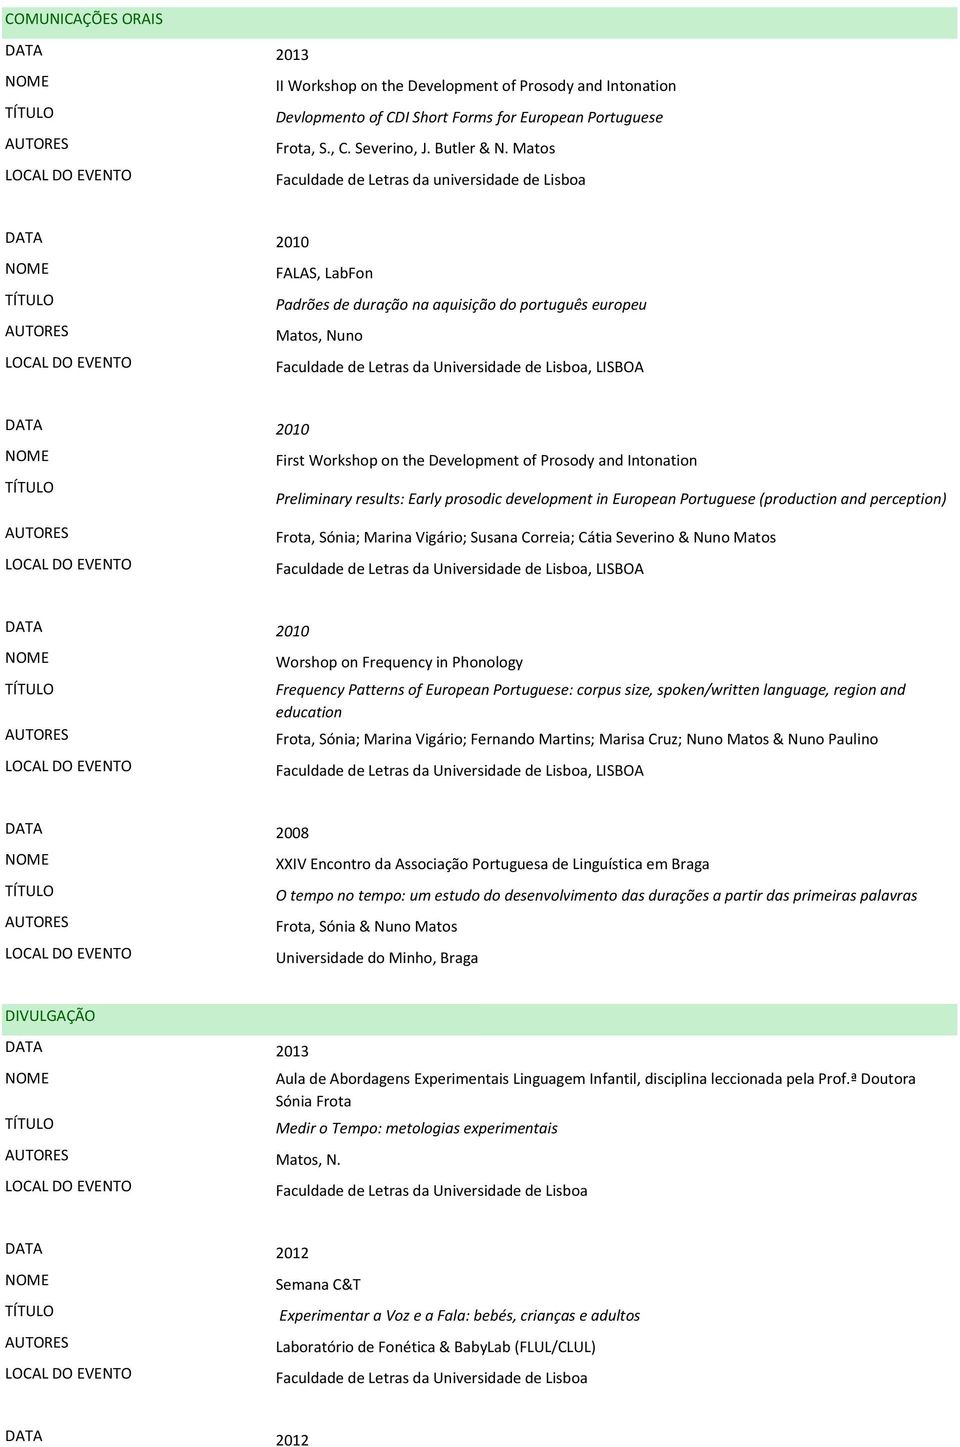 Intonation Preliminary results: Early prosodic development in European Portuguese (production and perception) Frota, Sónia; Marina Vigário; Susana Correia; Cátia Severino & Nuno Matos, LISBOA 2010